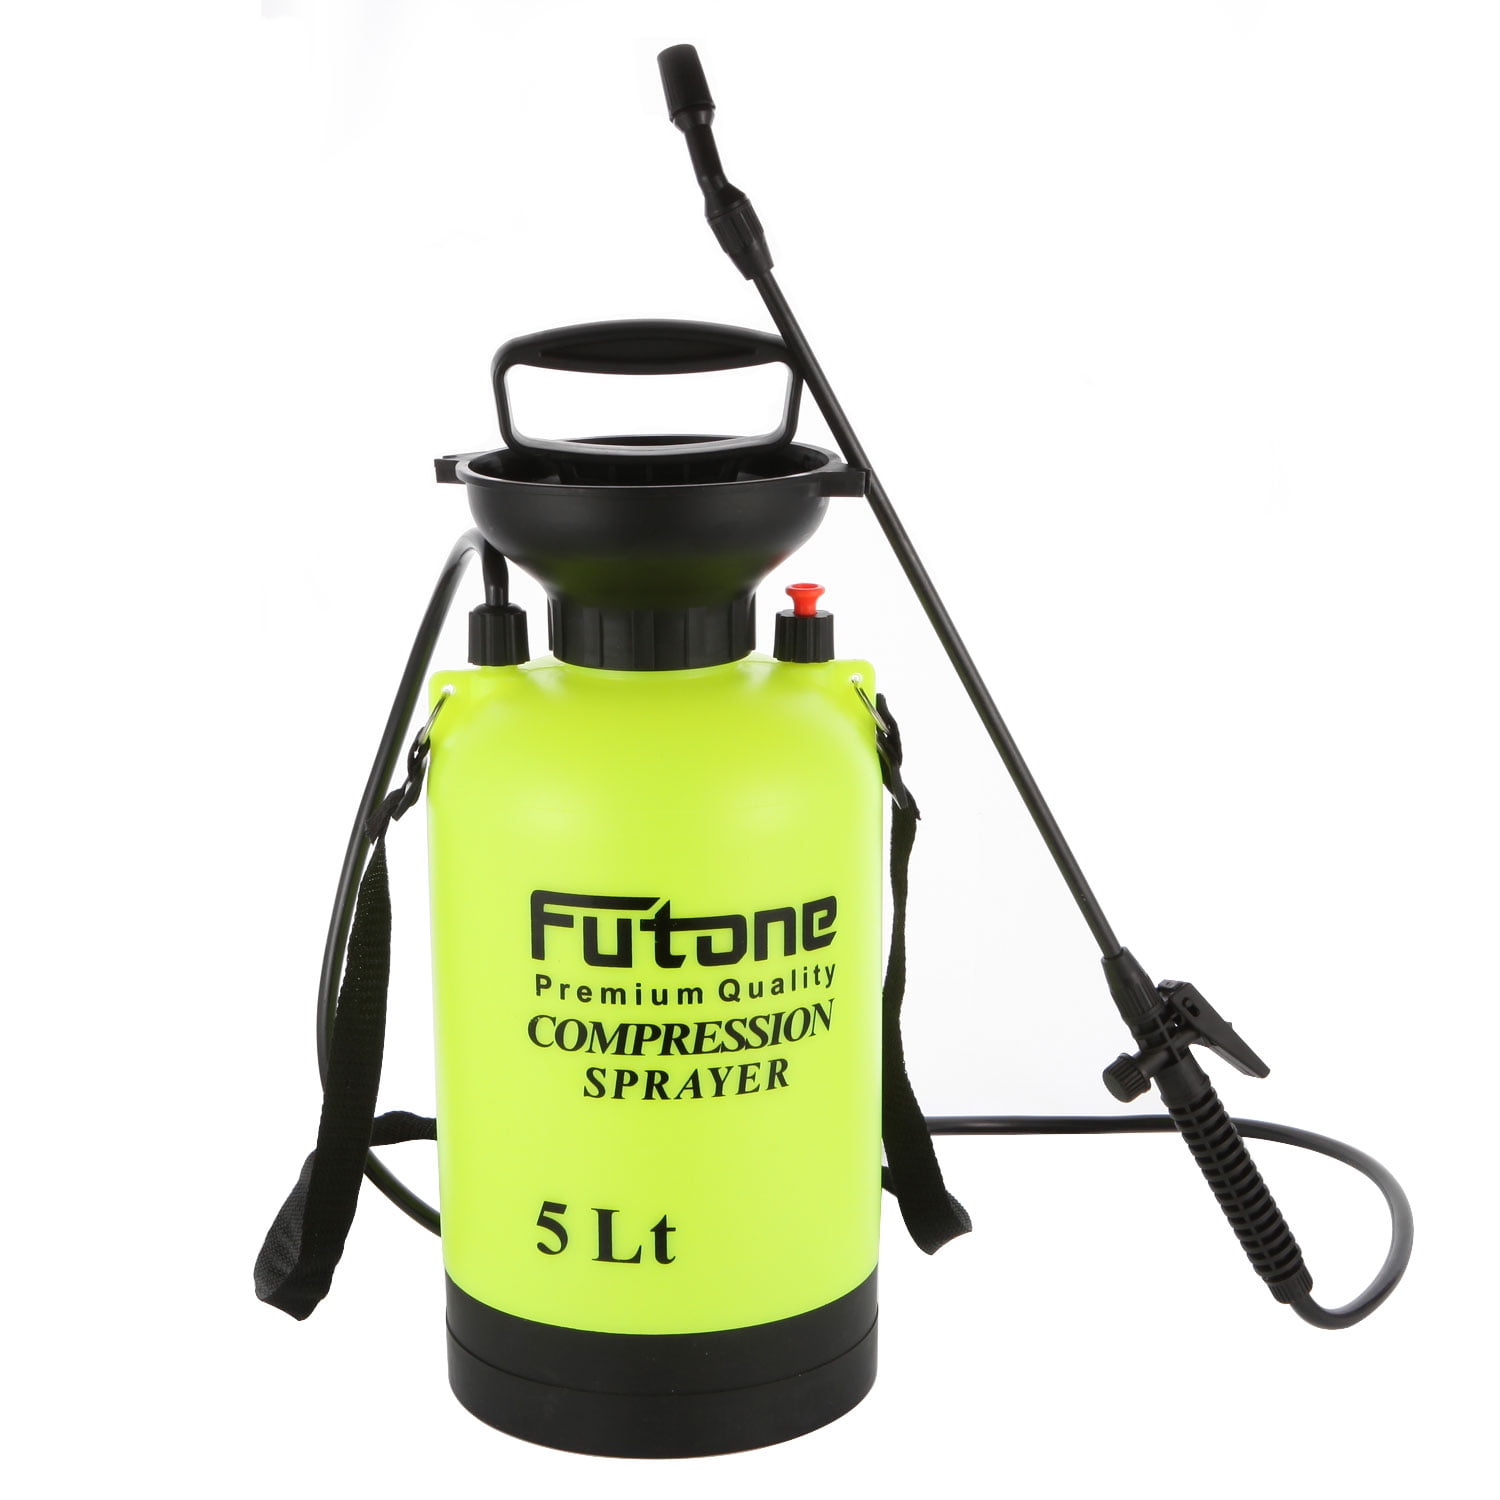 Portable Shoulder Sprayer for Home Garden Chemicals or Disinfection US SELLER 